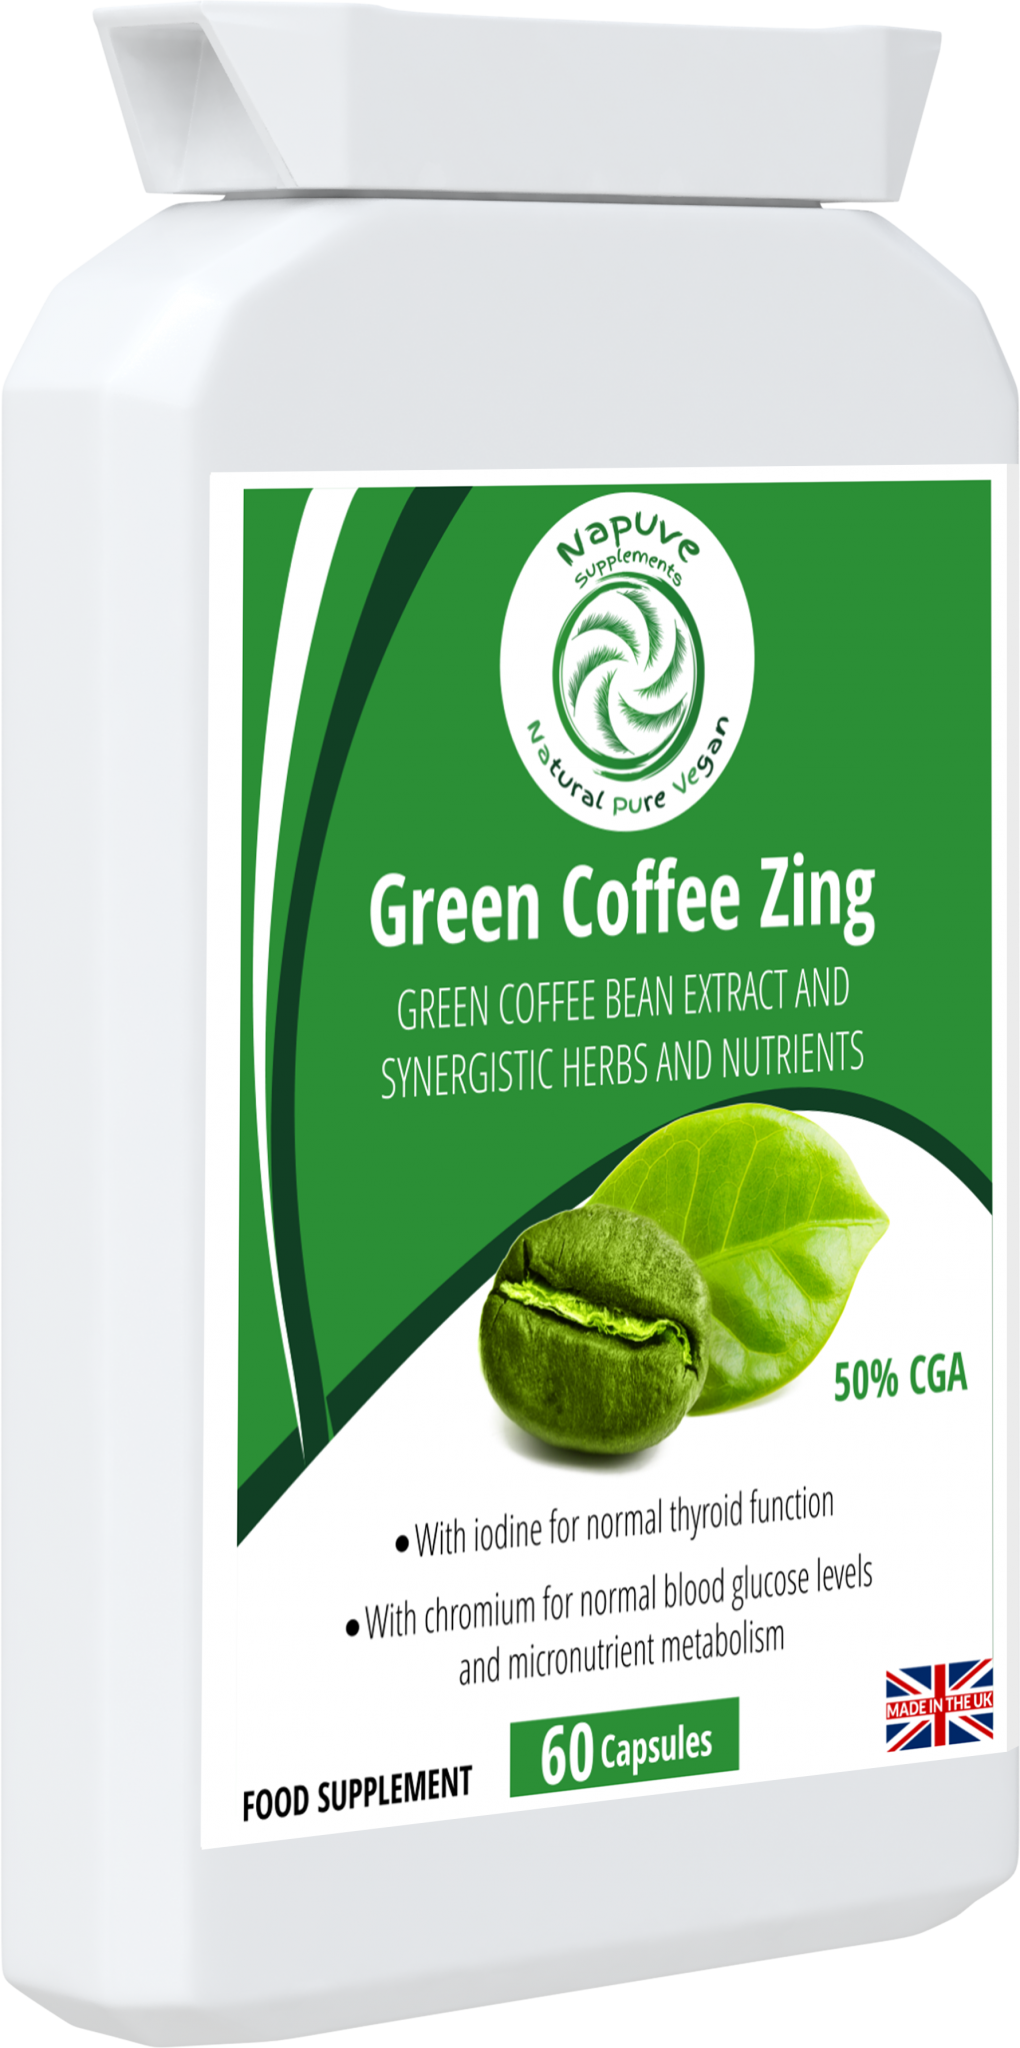 Green Coffee Zing – Green Coffee Bean Extract